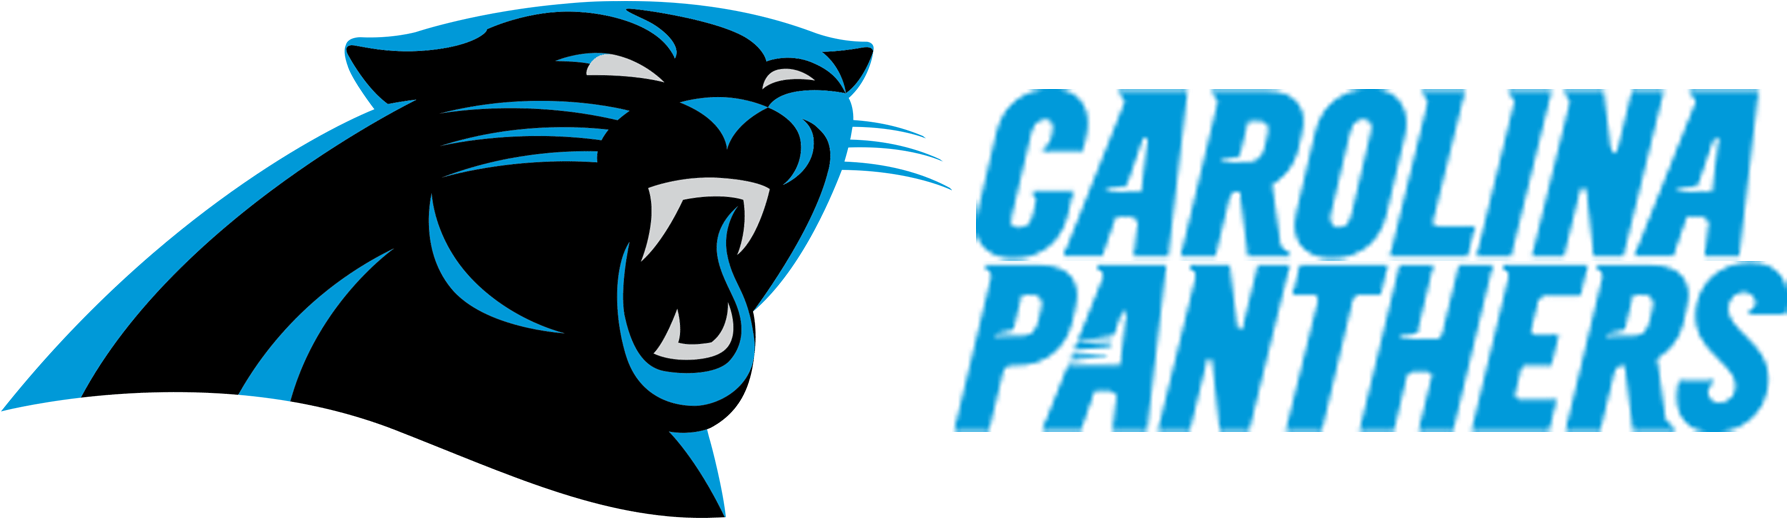 Franchise Analysis Carolina Panthers U2022 The Game - Carolina Panthers Clip Art (1894x668)